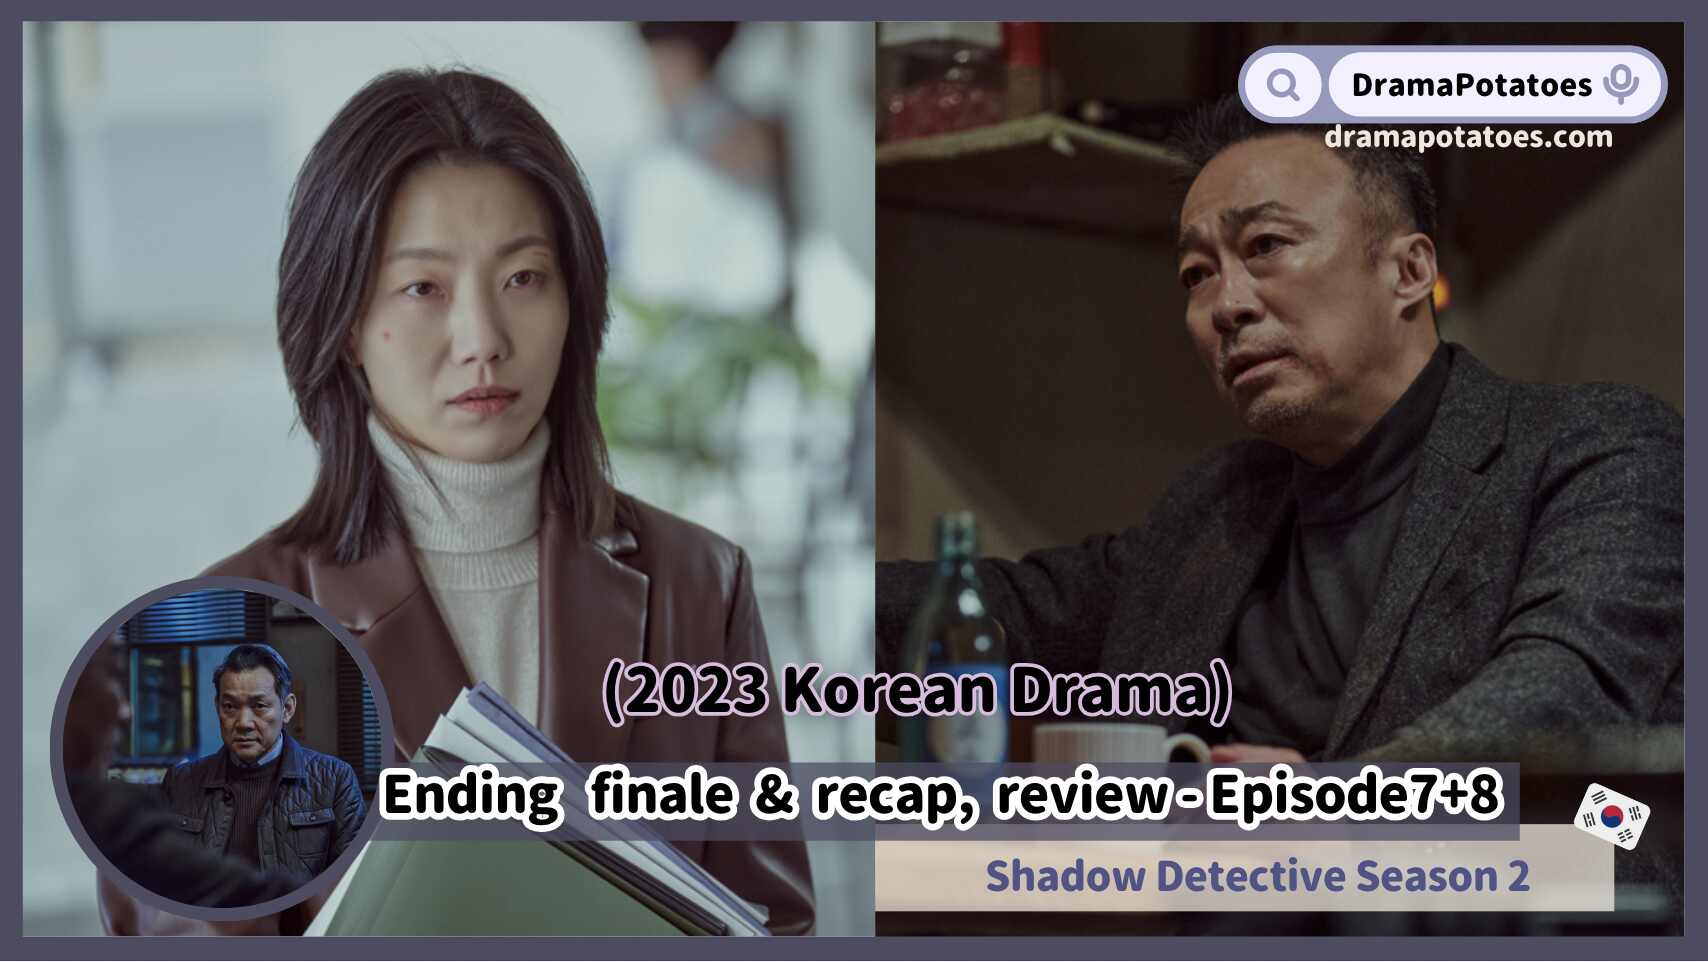 Shadow Detective Season 2 ending finale & recap, review - Episode7+8 -  Drama Potatoes ❤️